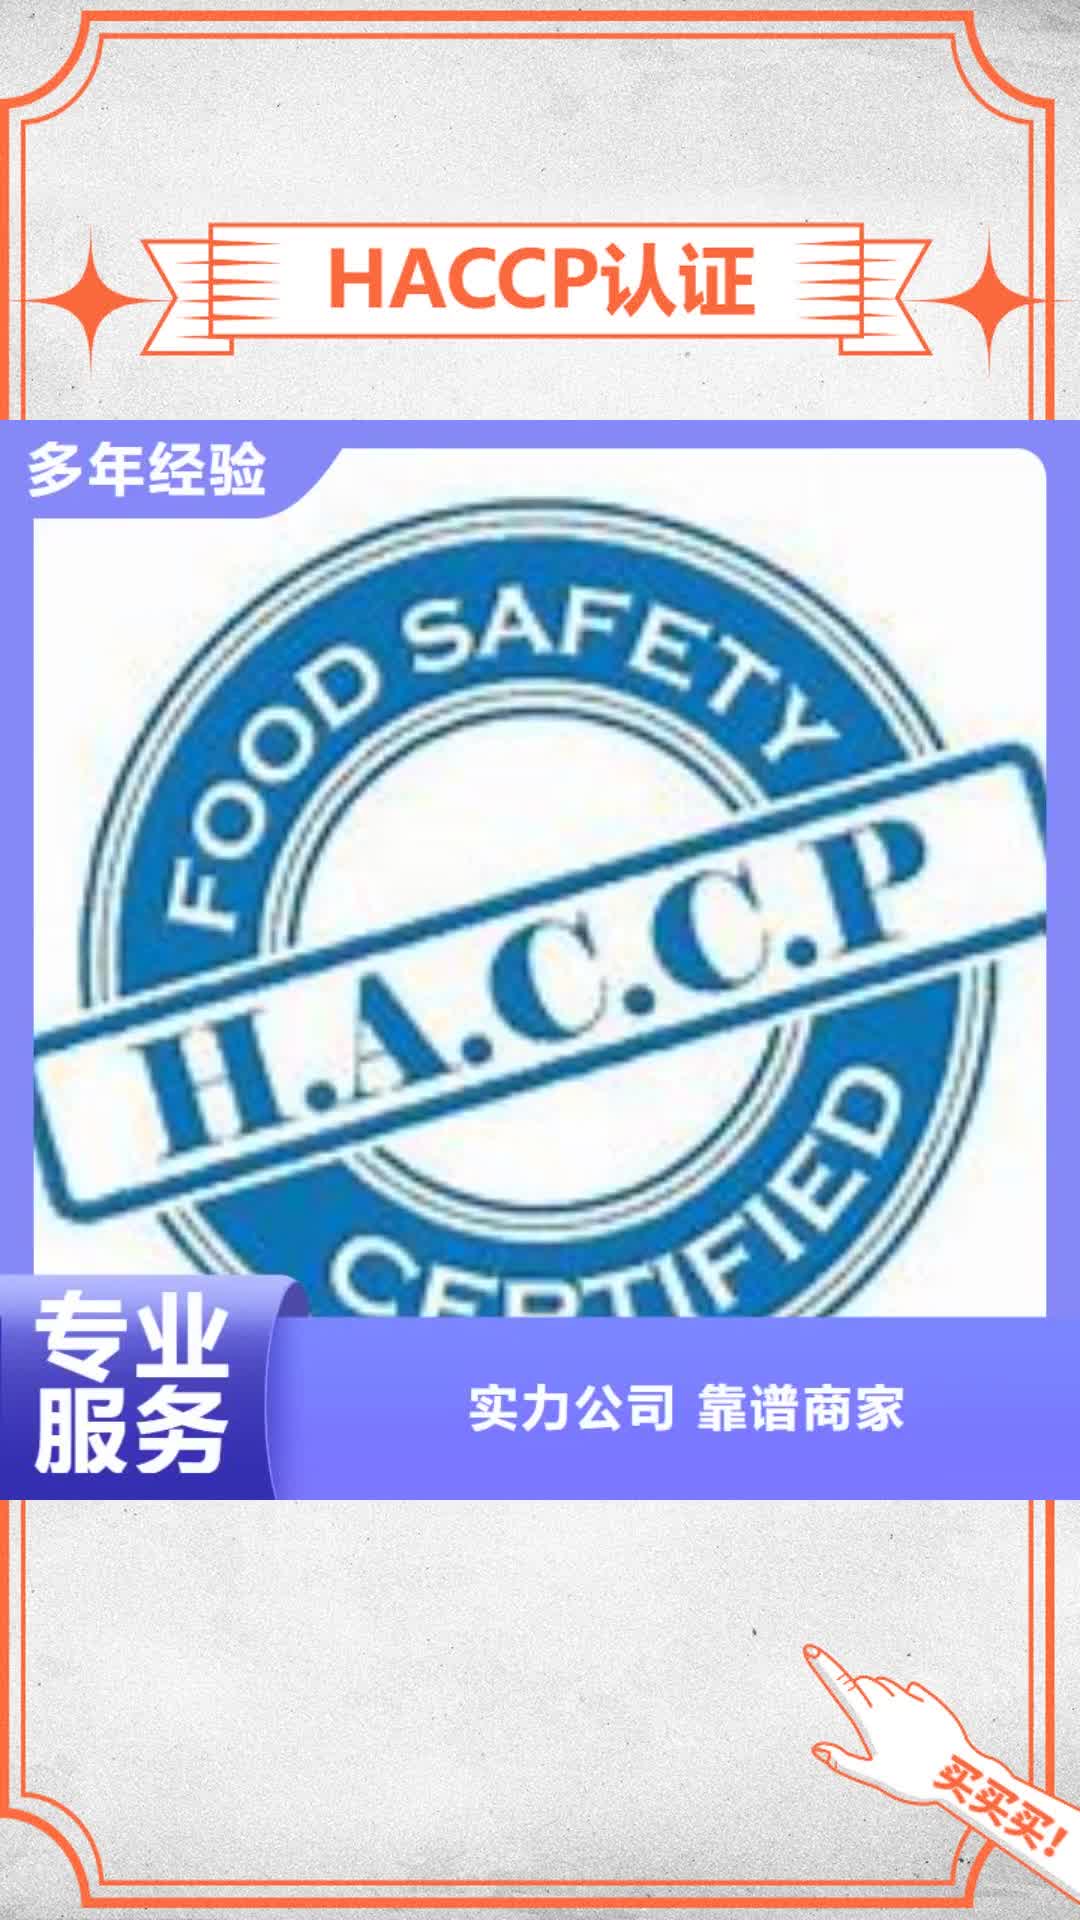 烟台 HACCP认证【ISO9001\ISO9000\ISO14001认证】讲究信誉